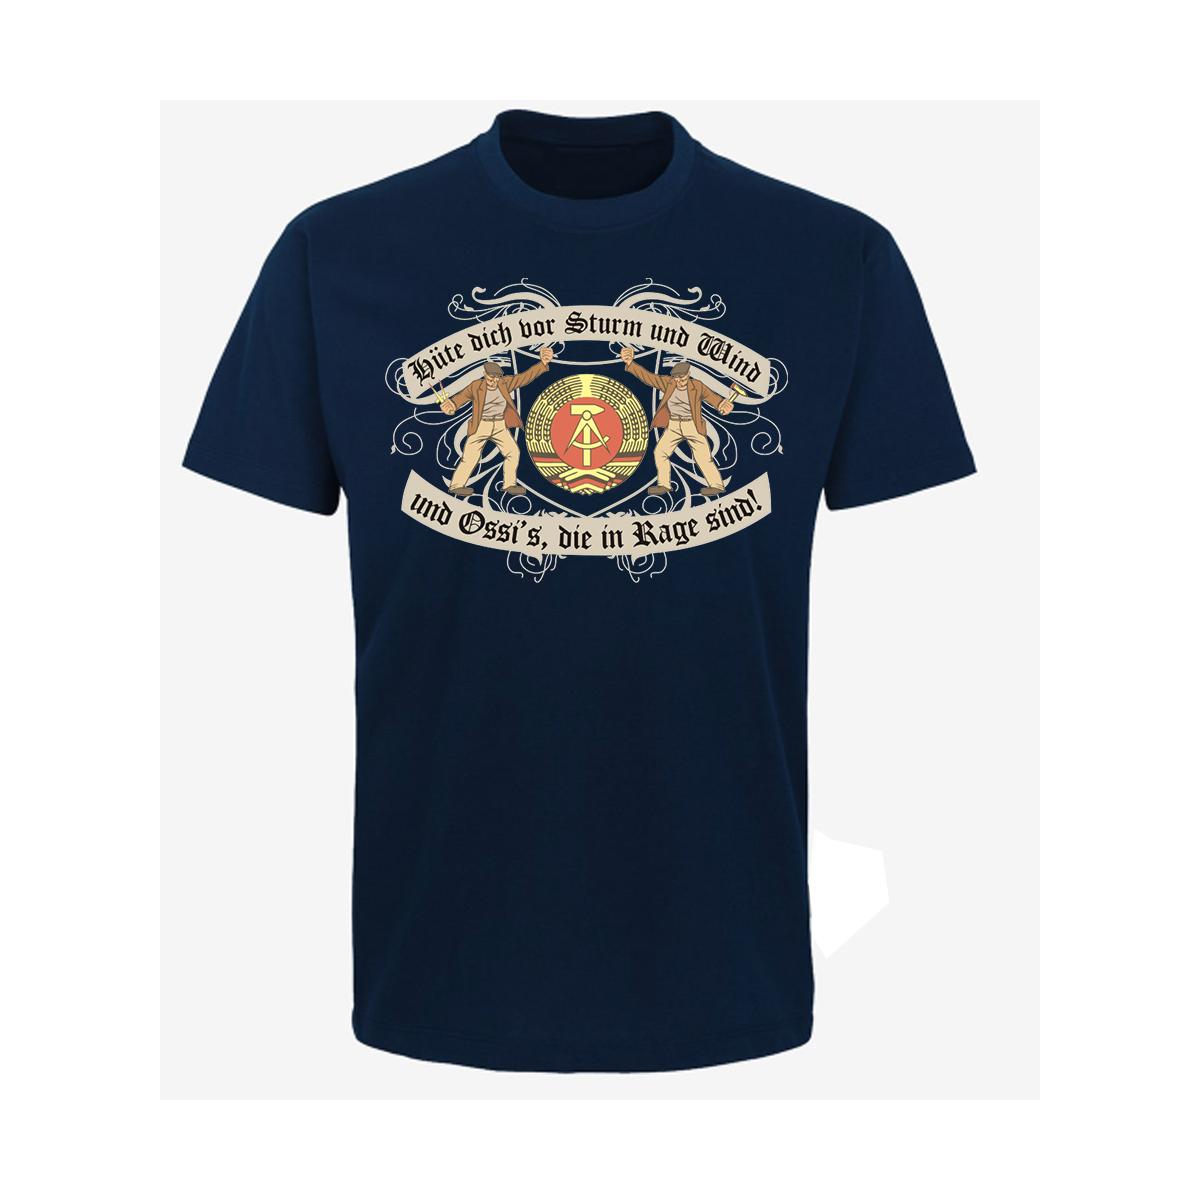 Ossis in Rage - Männer T-Shirt - navy